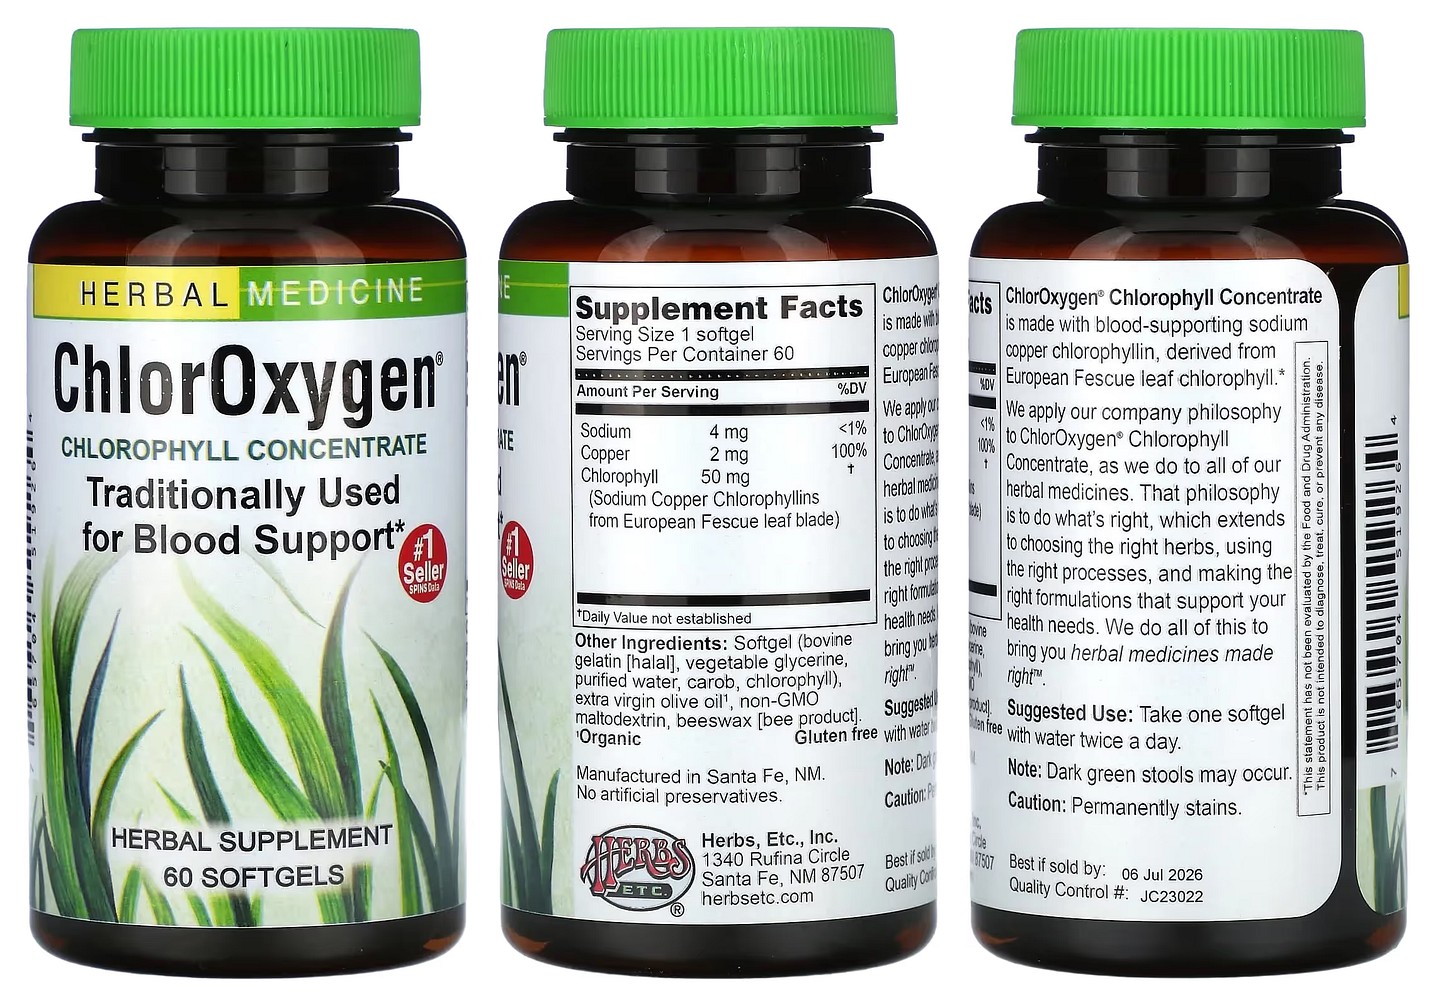 Herbs Etc, ChlorOxygen packaging